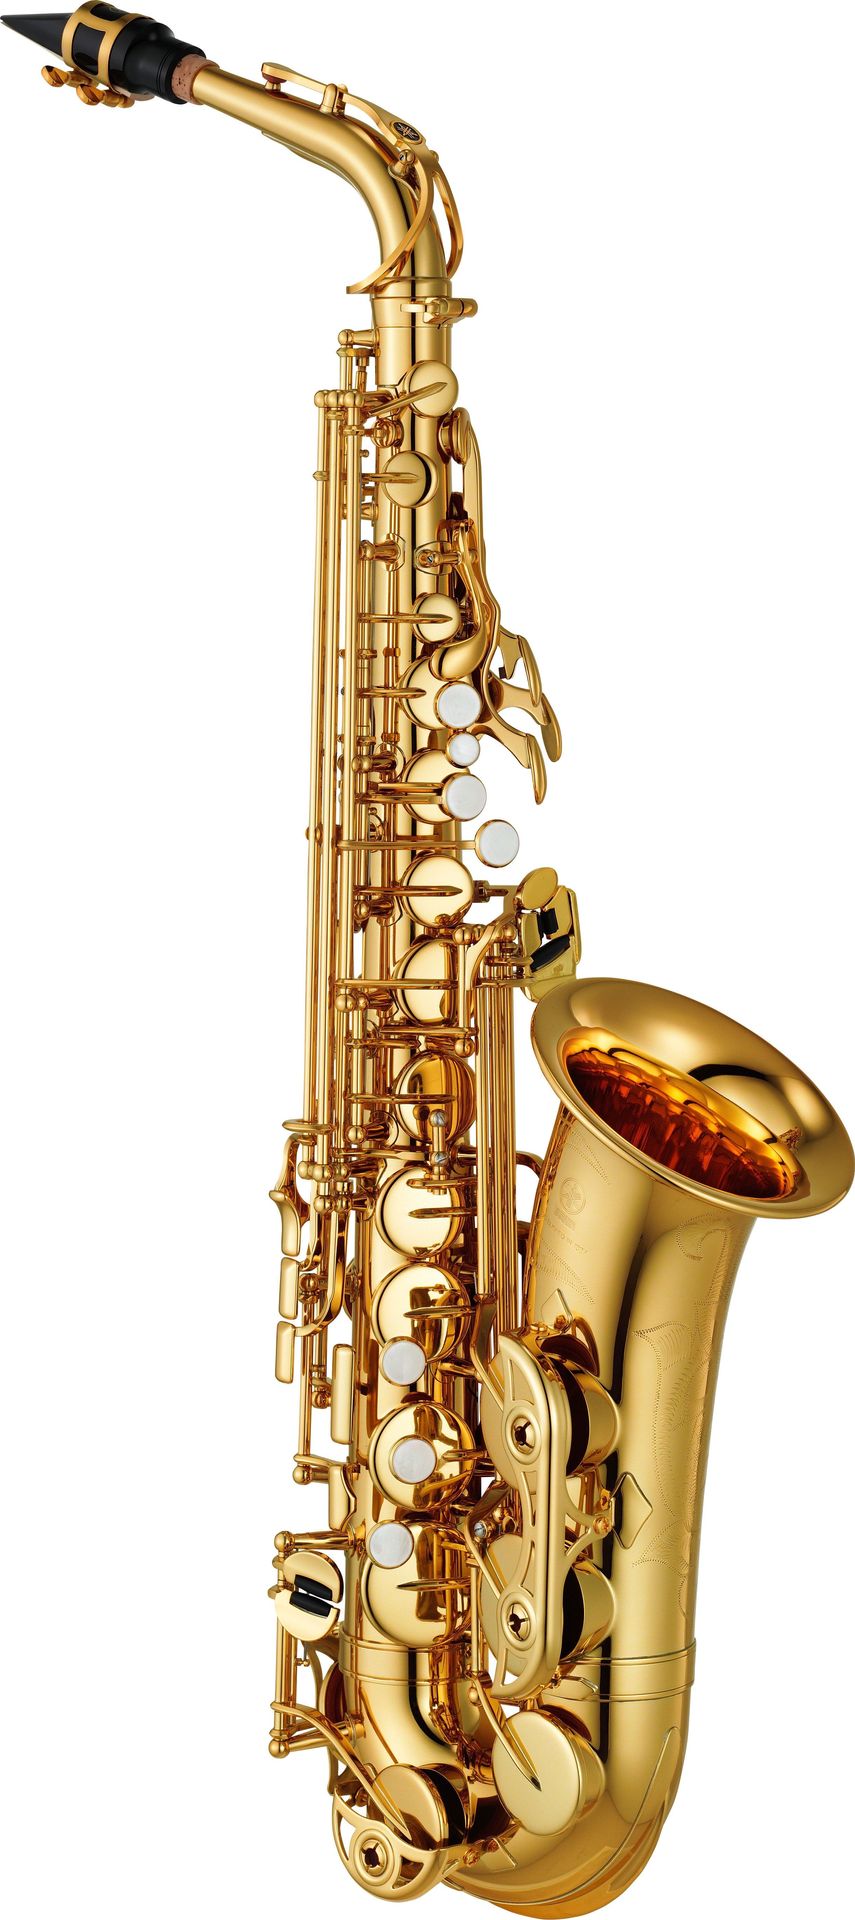 Yamaha YAS 480 Altsaxophon, incl. Etui u. Zubehör  - Onlineshop Musikhaus Markstein